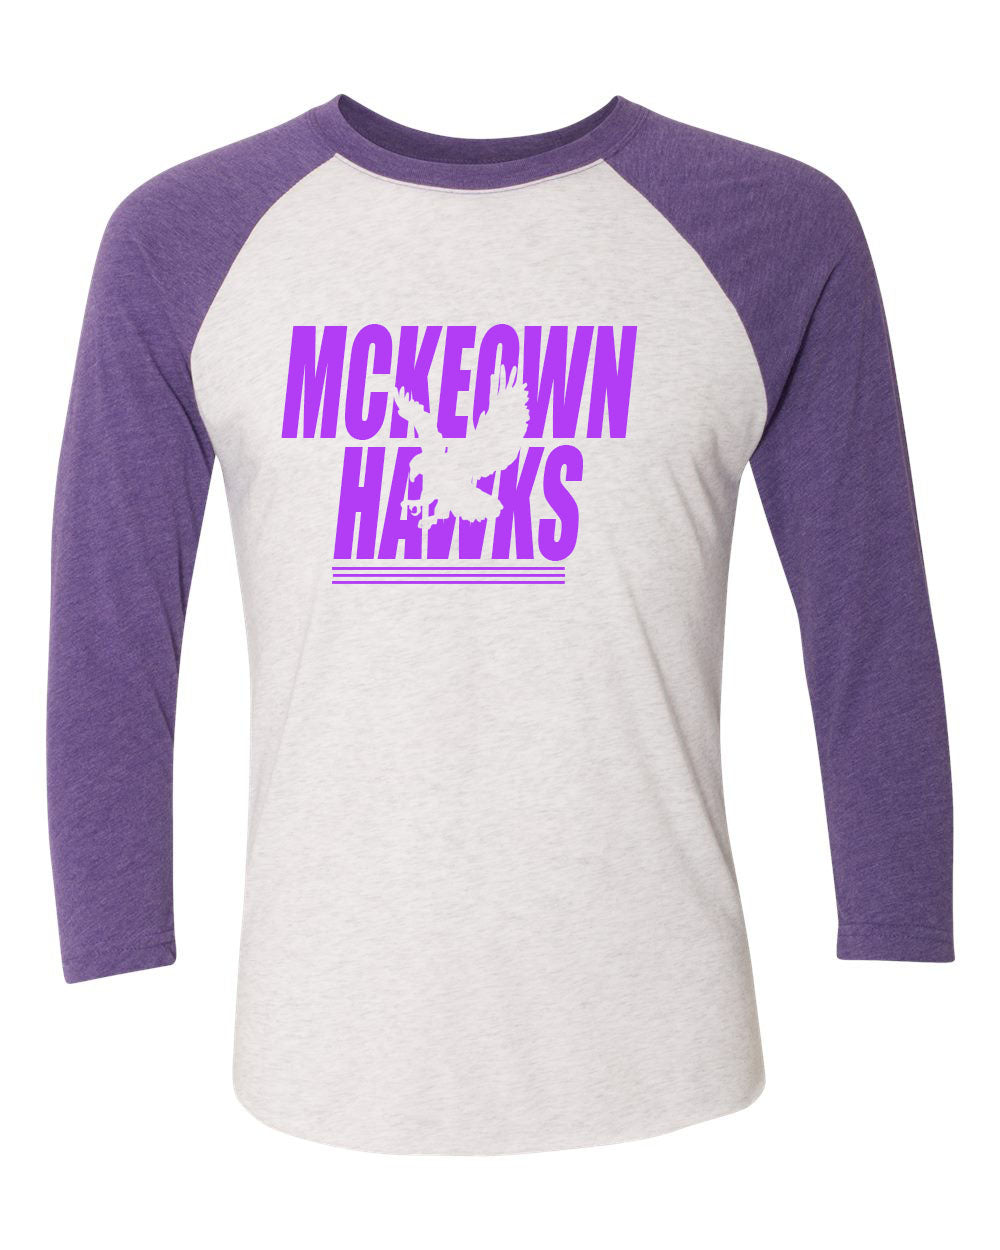 McKeown Hawks Raglan shirt